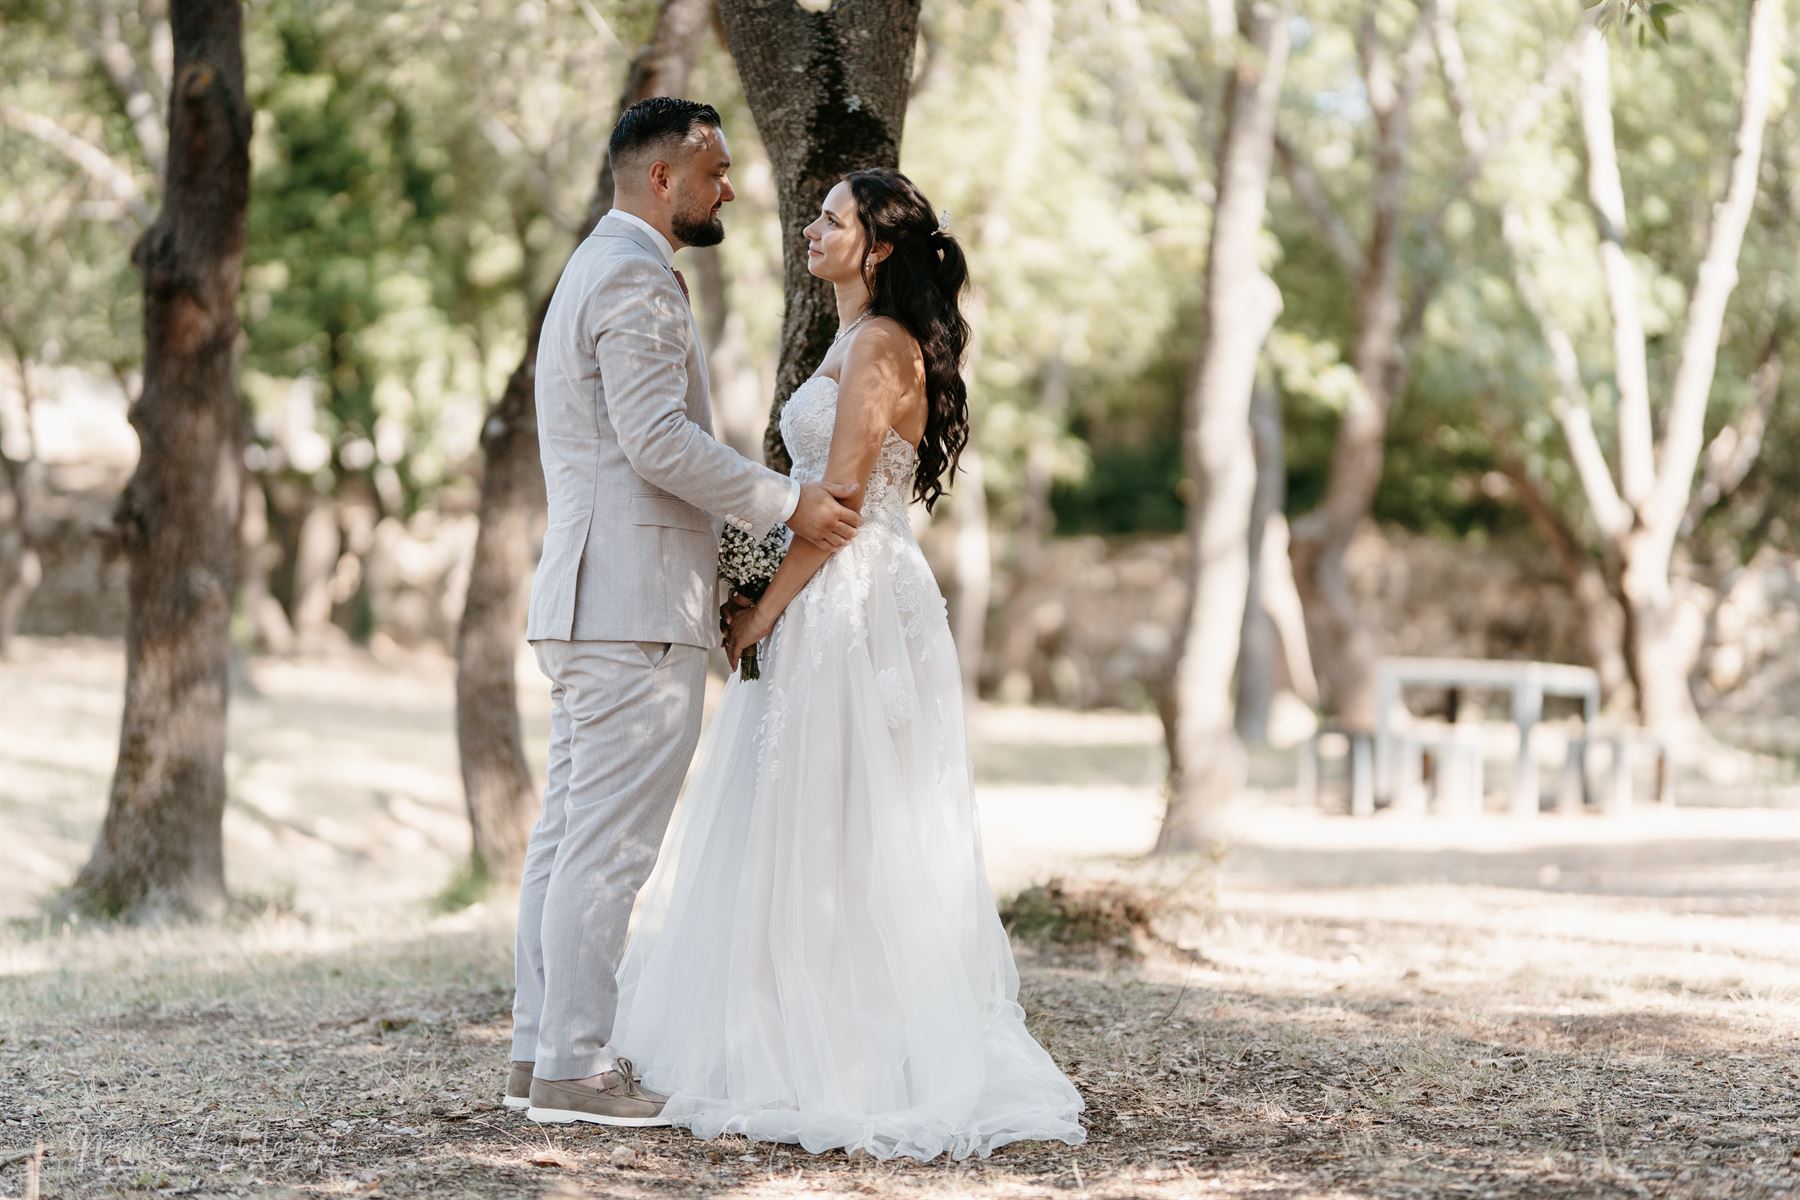 Wedding Photographer Aix en Provence: Capturing Love's Embrace 5